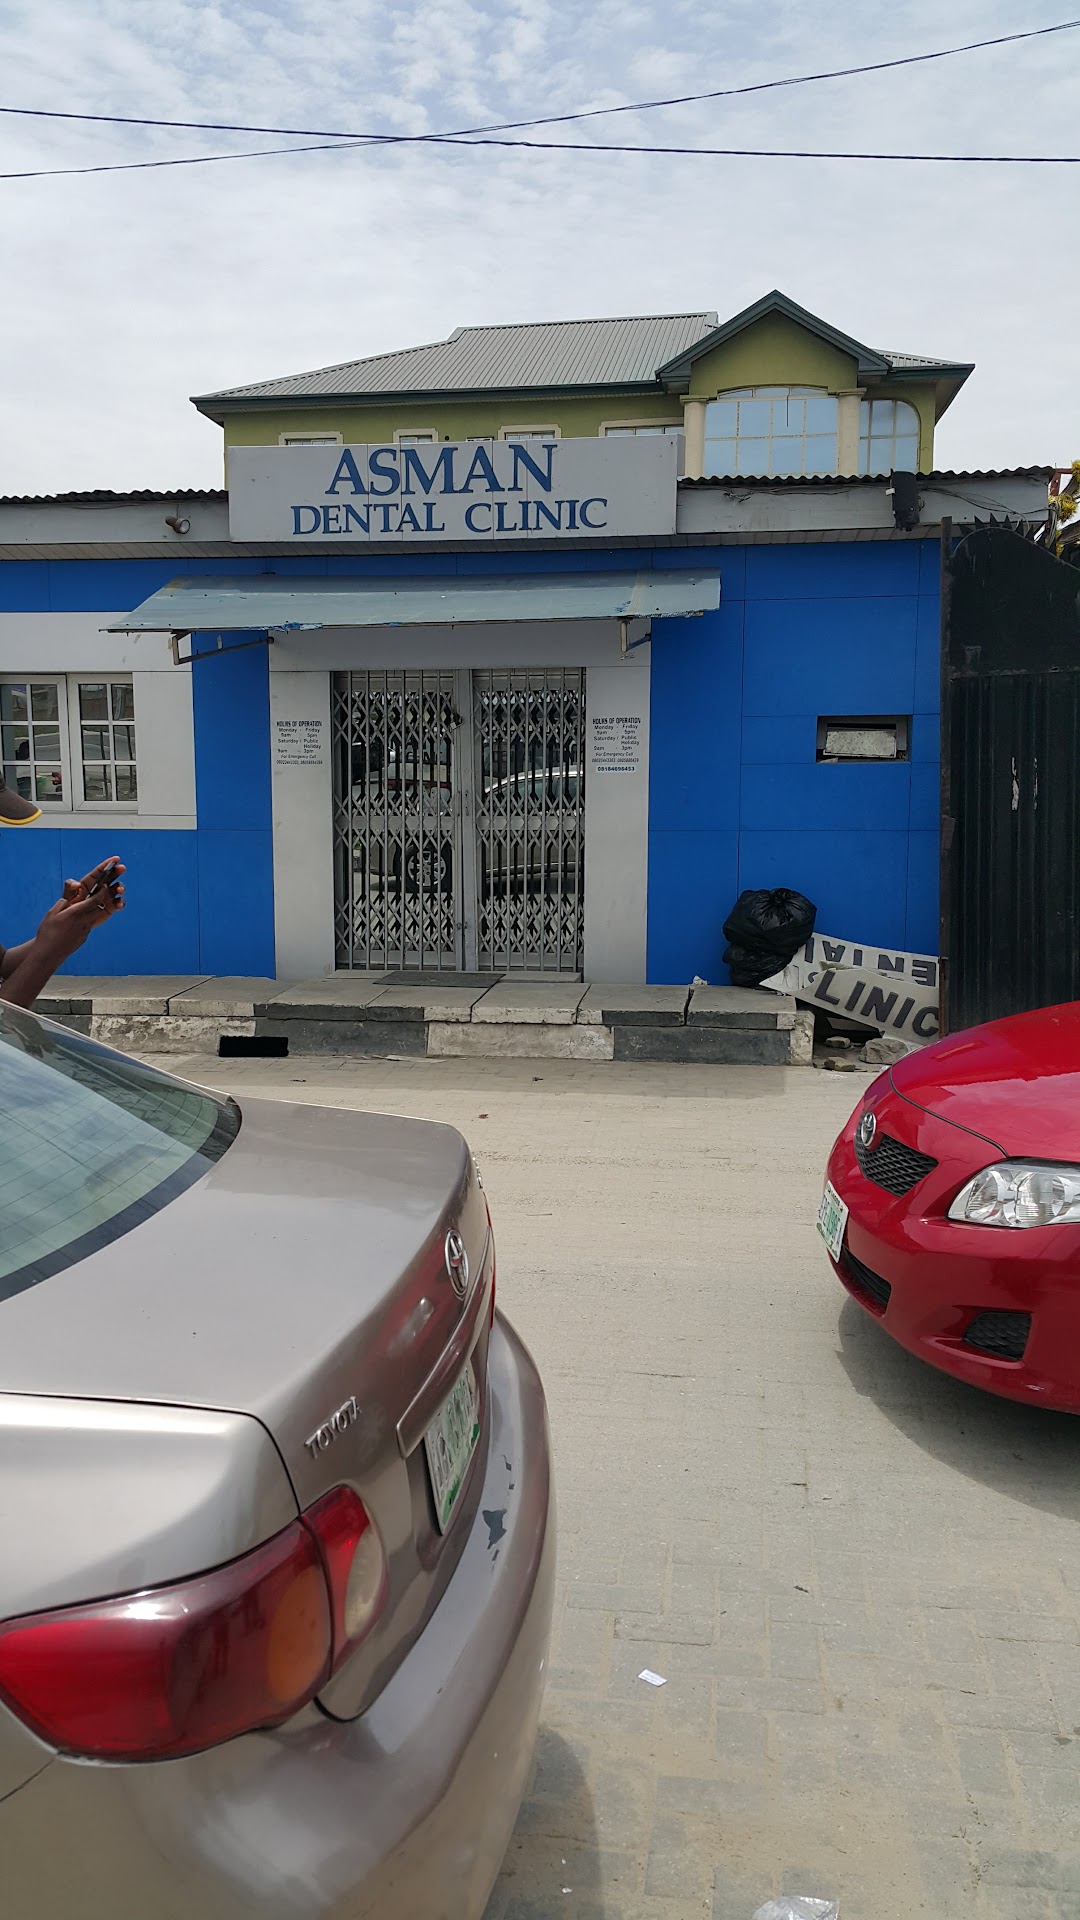 Asman Dental Clinic